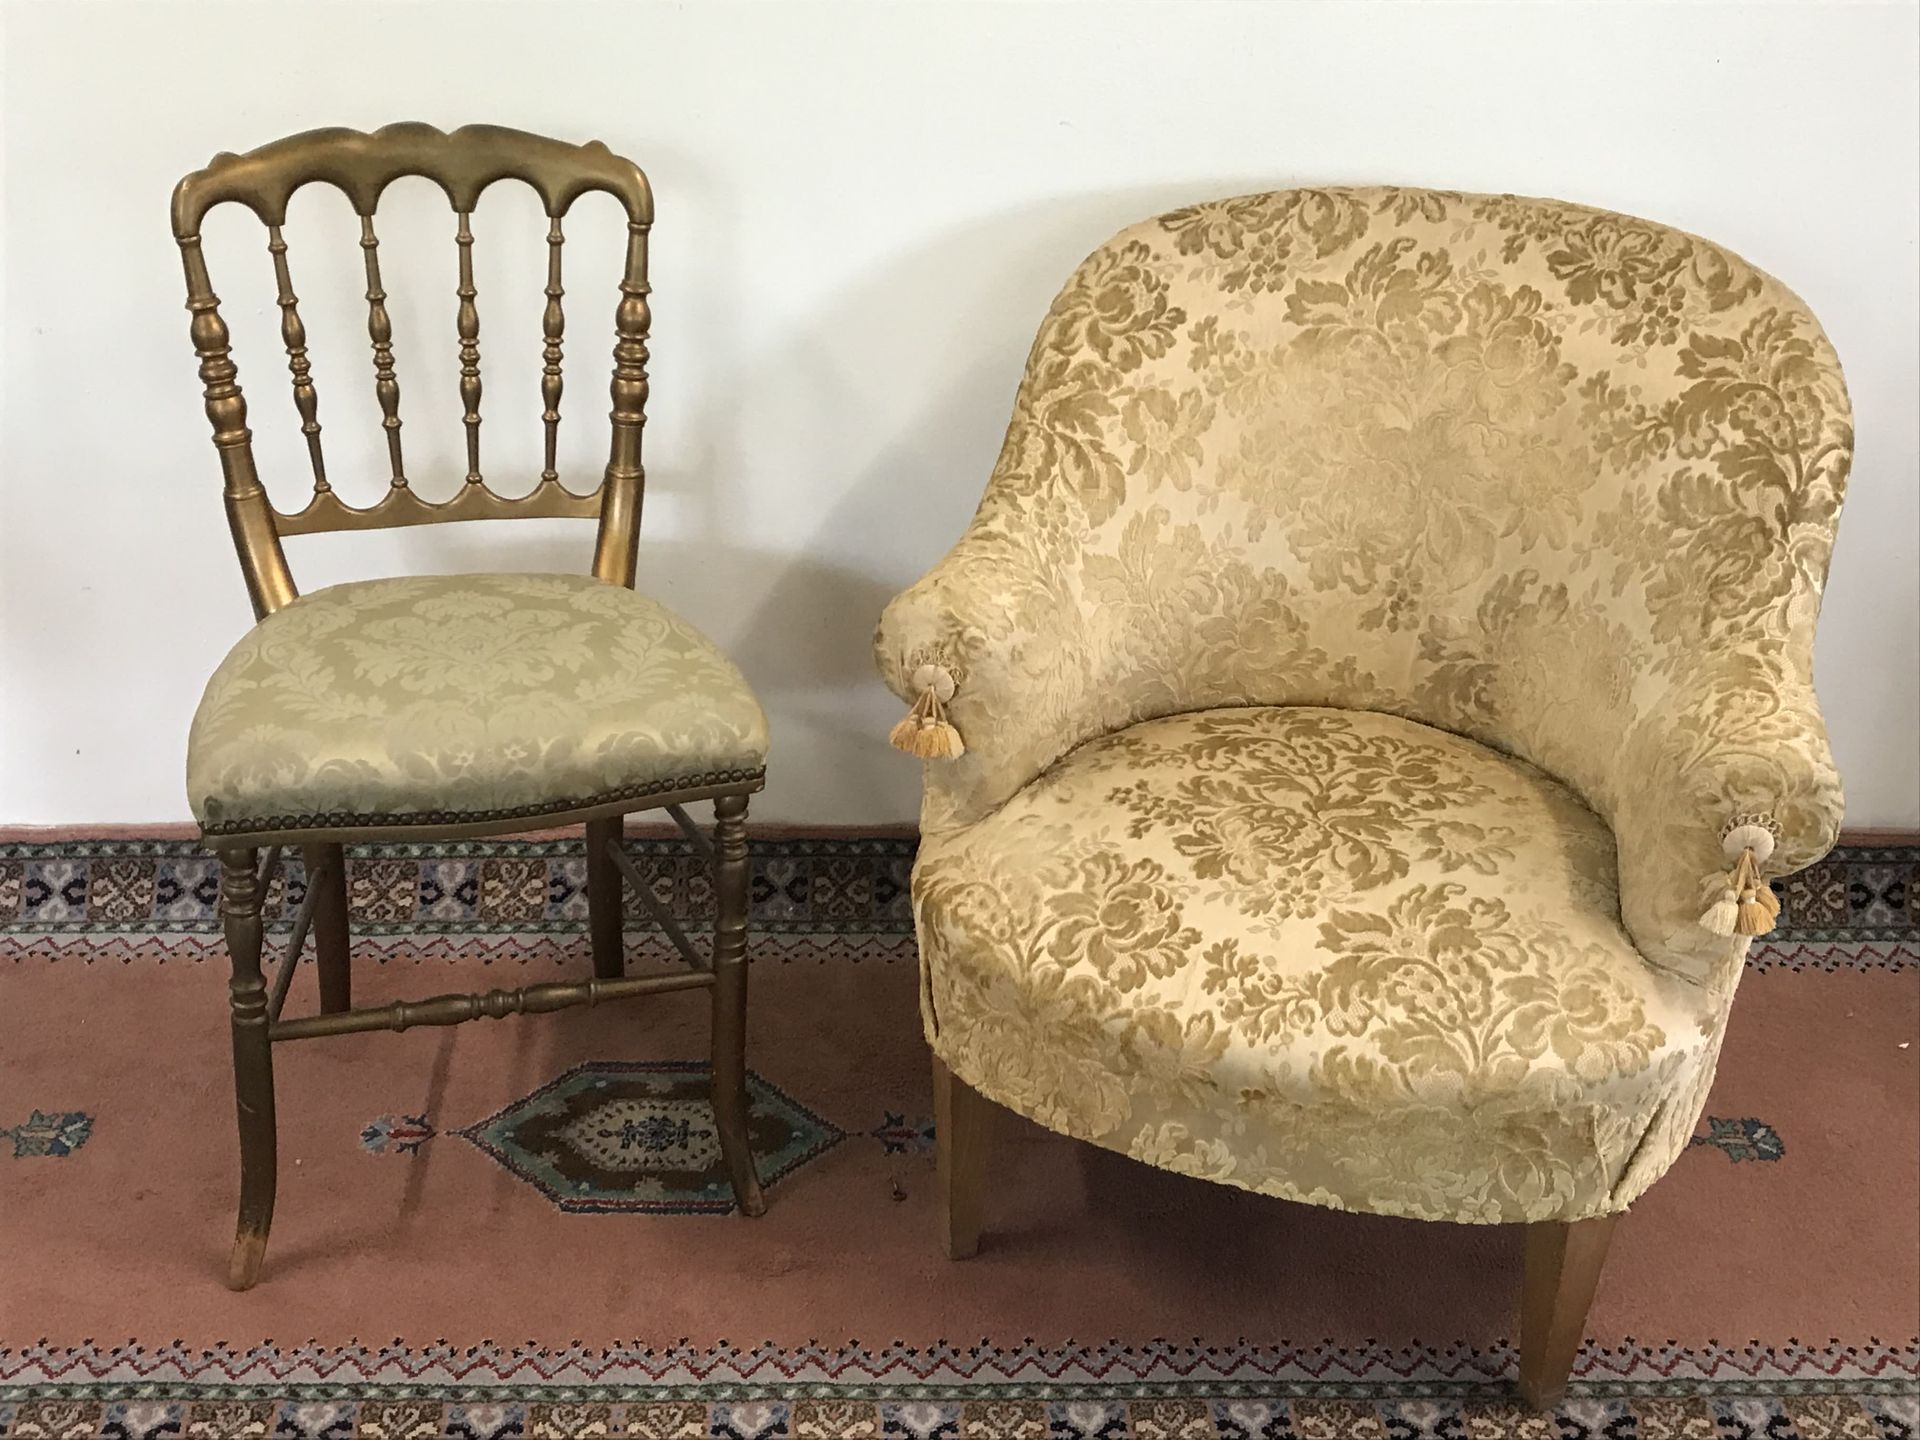 Null 热水器

以天鹅绒和绒球为面料的沙发

附有一个拿破仑三世风格的飞行椅